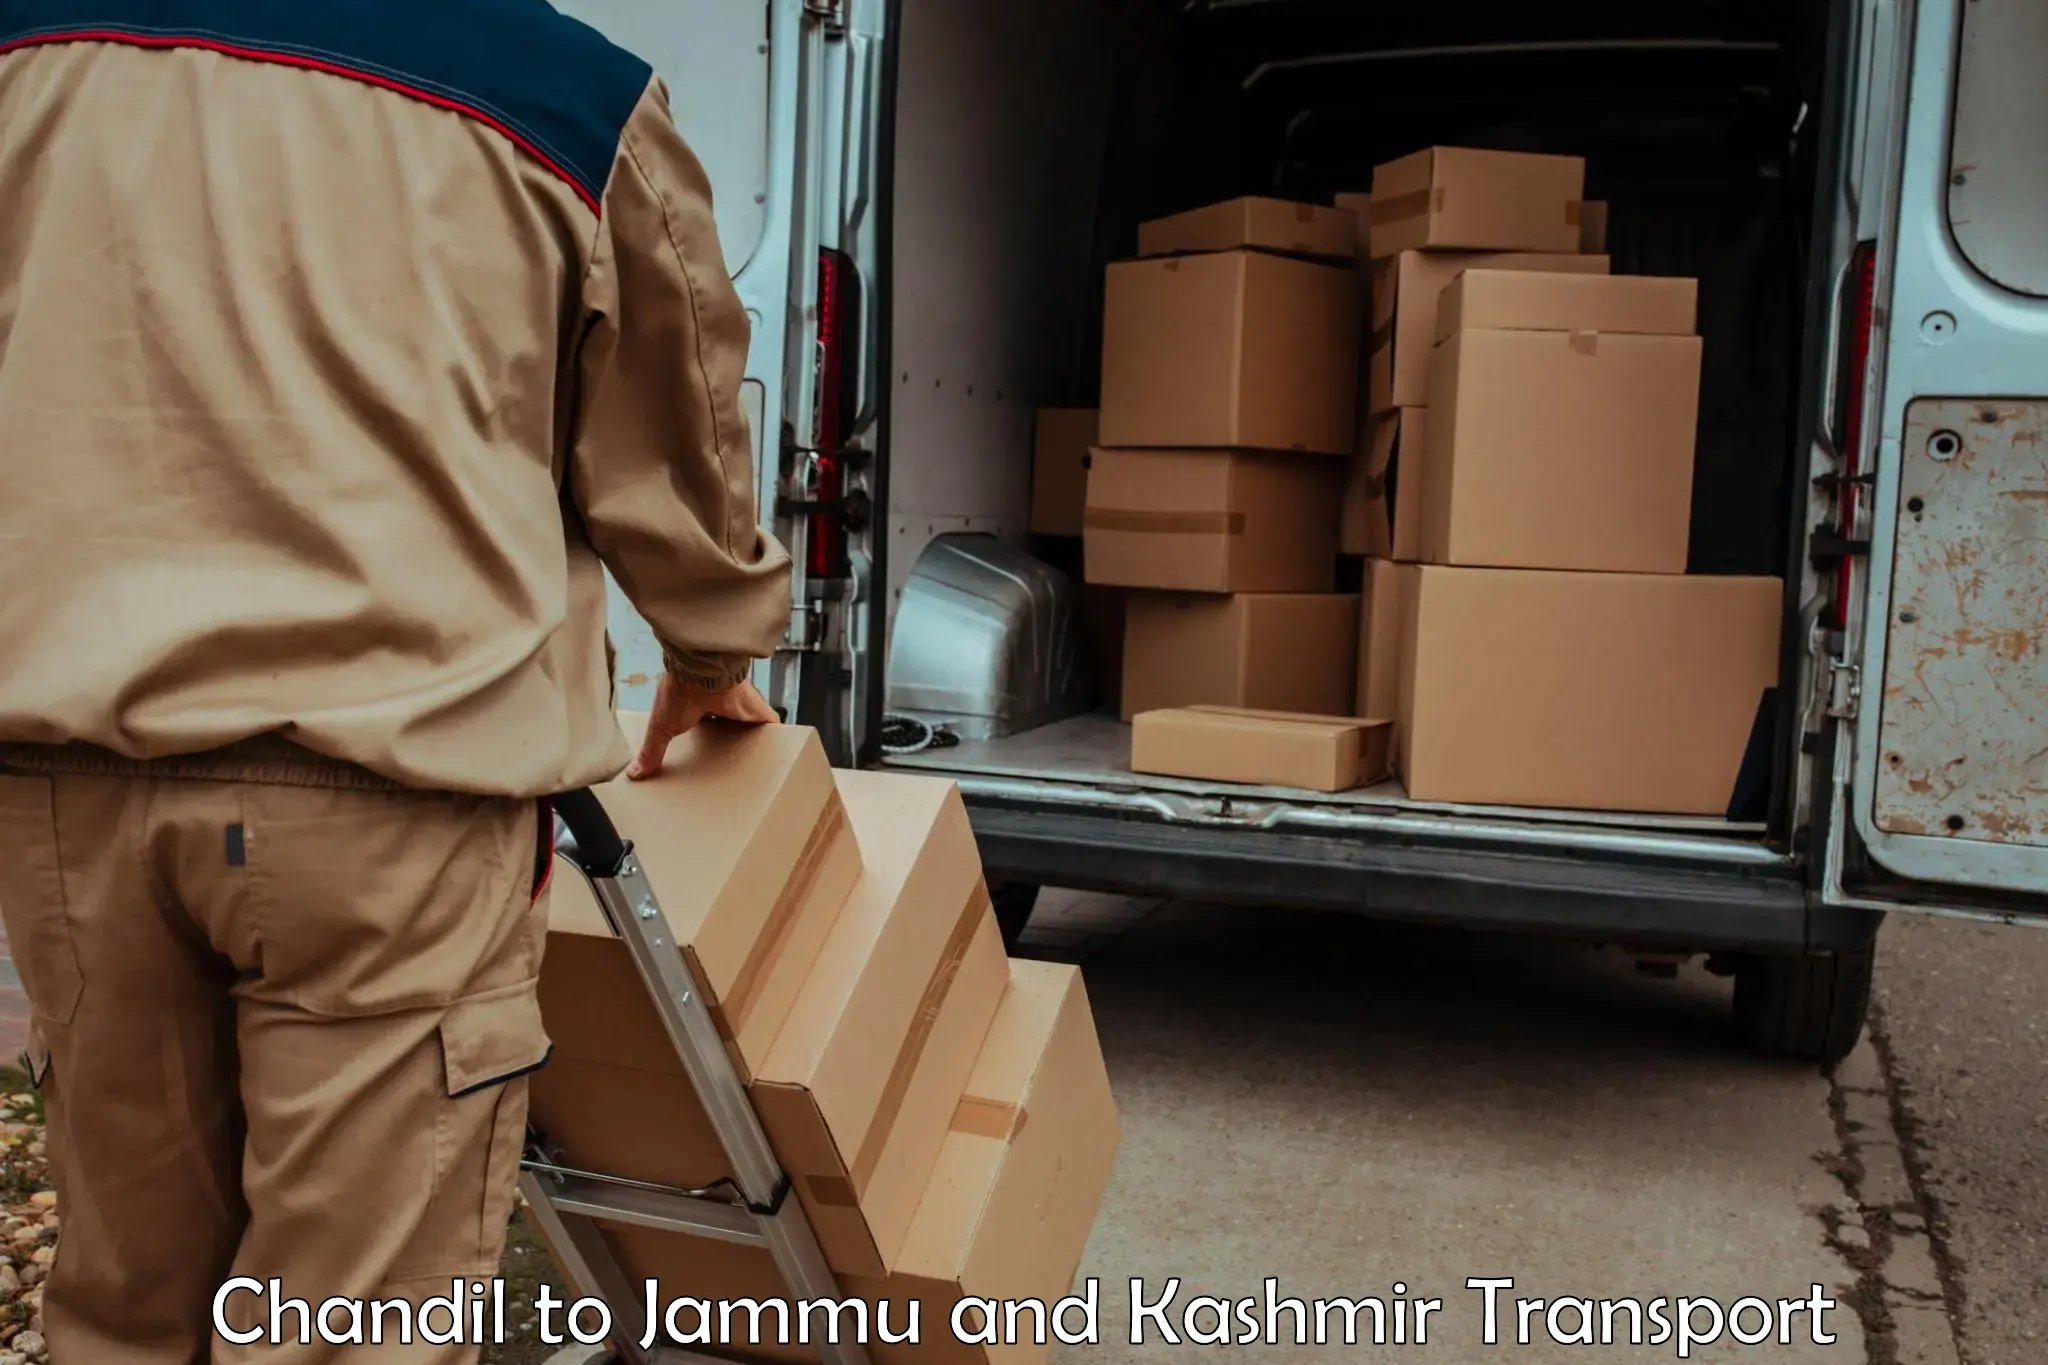 Shipping partner Chandil to Kargil